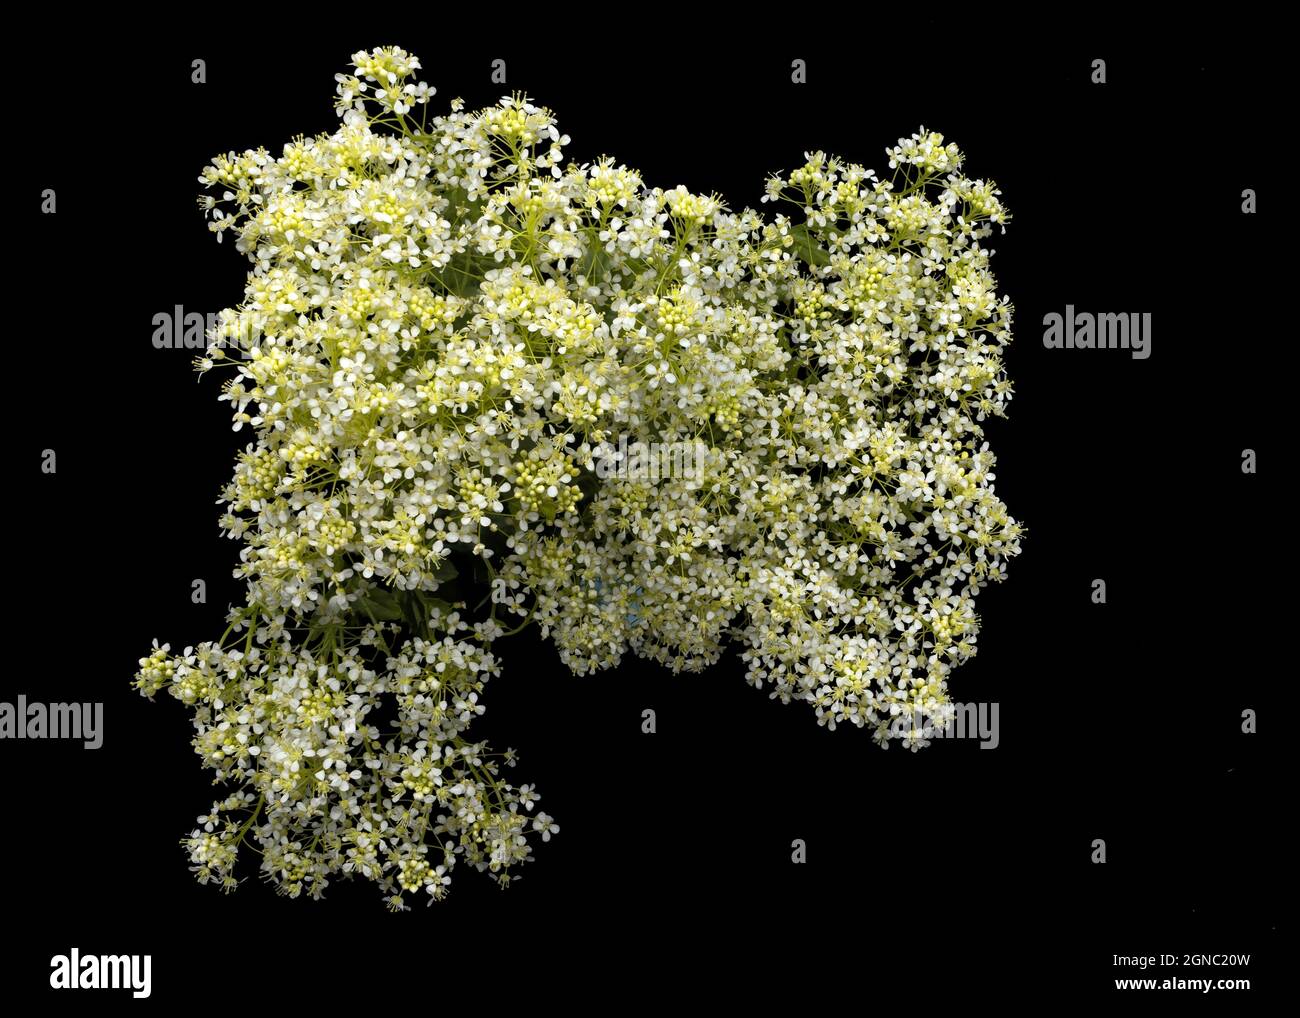 whitetop, perennial peppergrass, Stock Photo